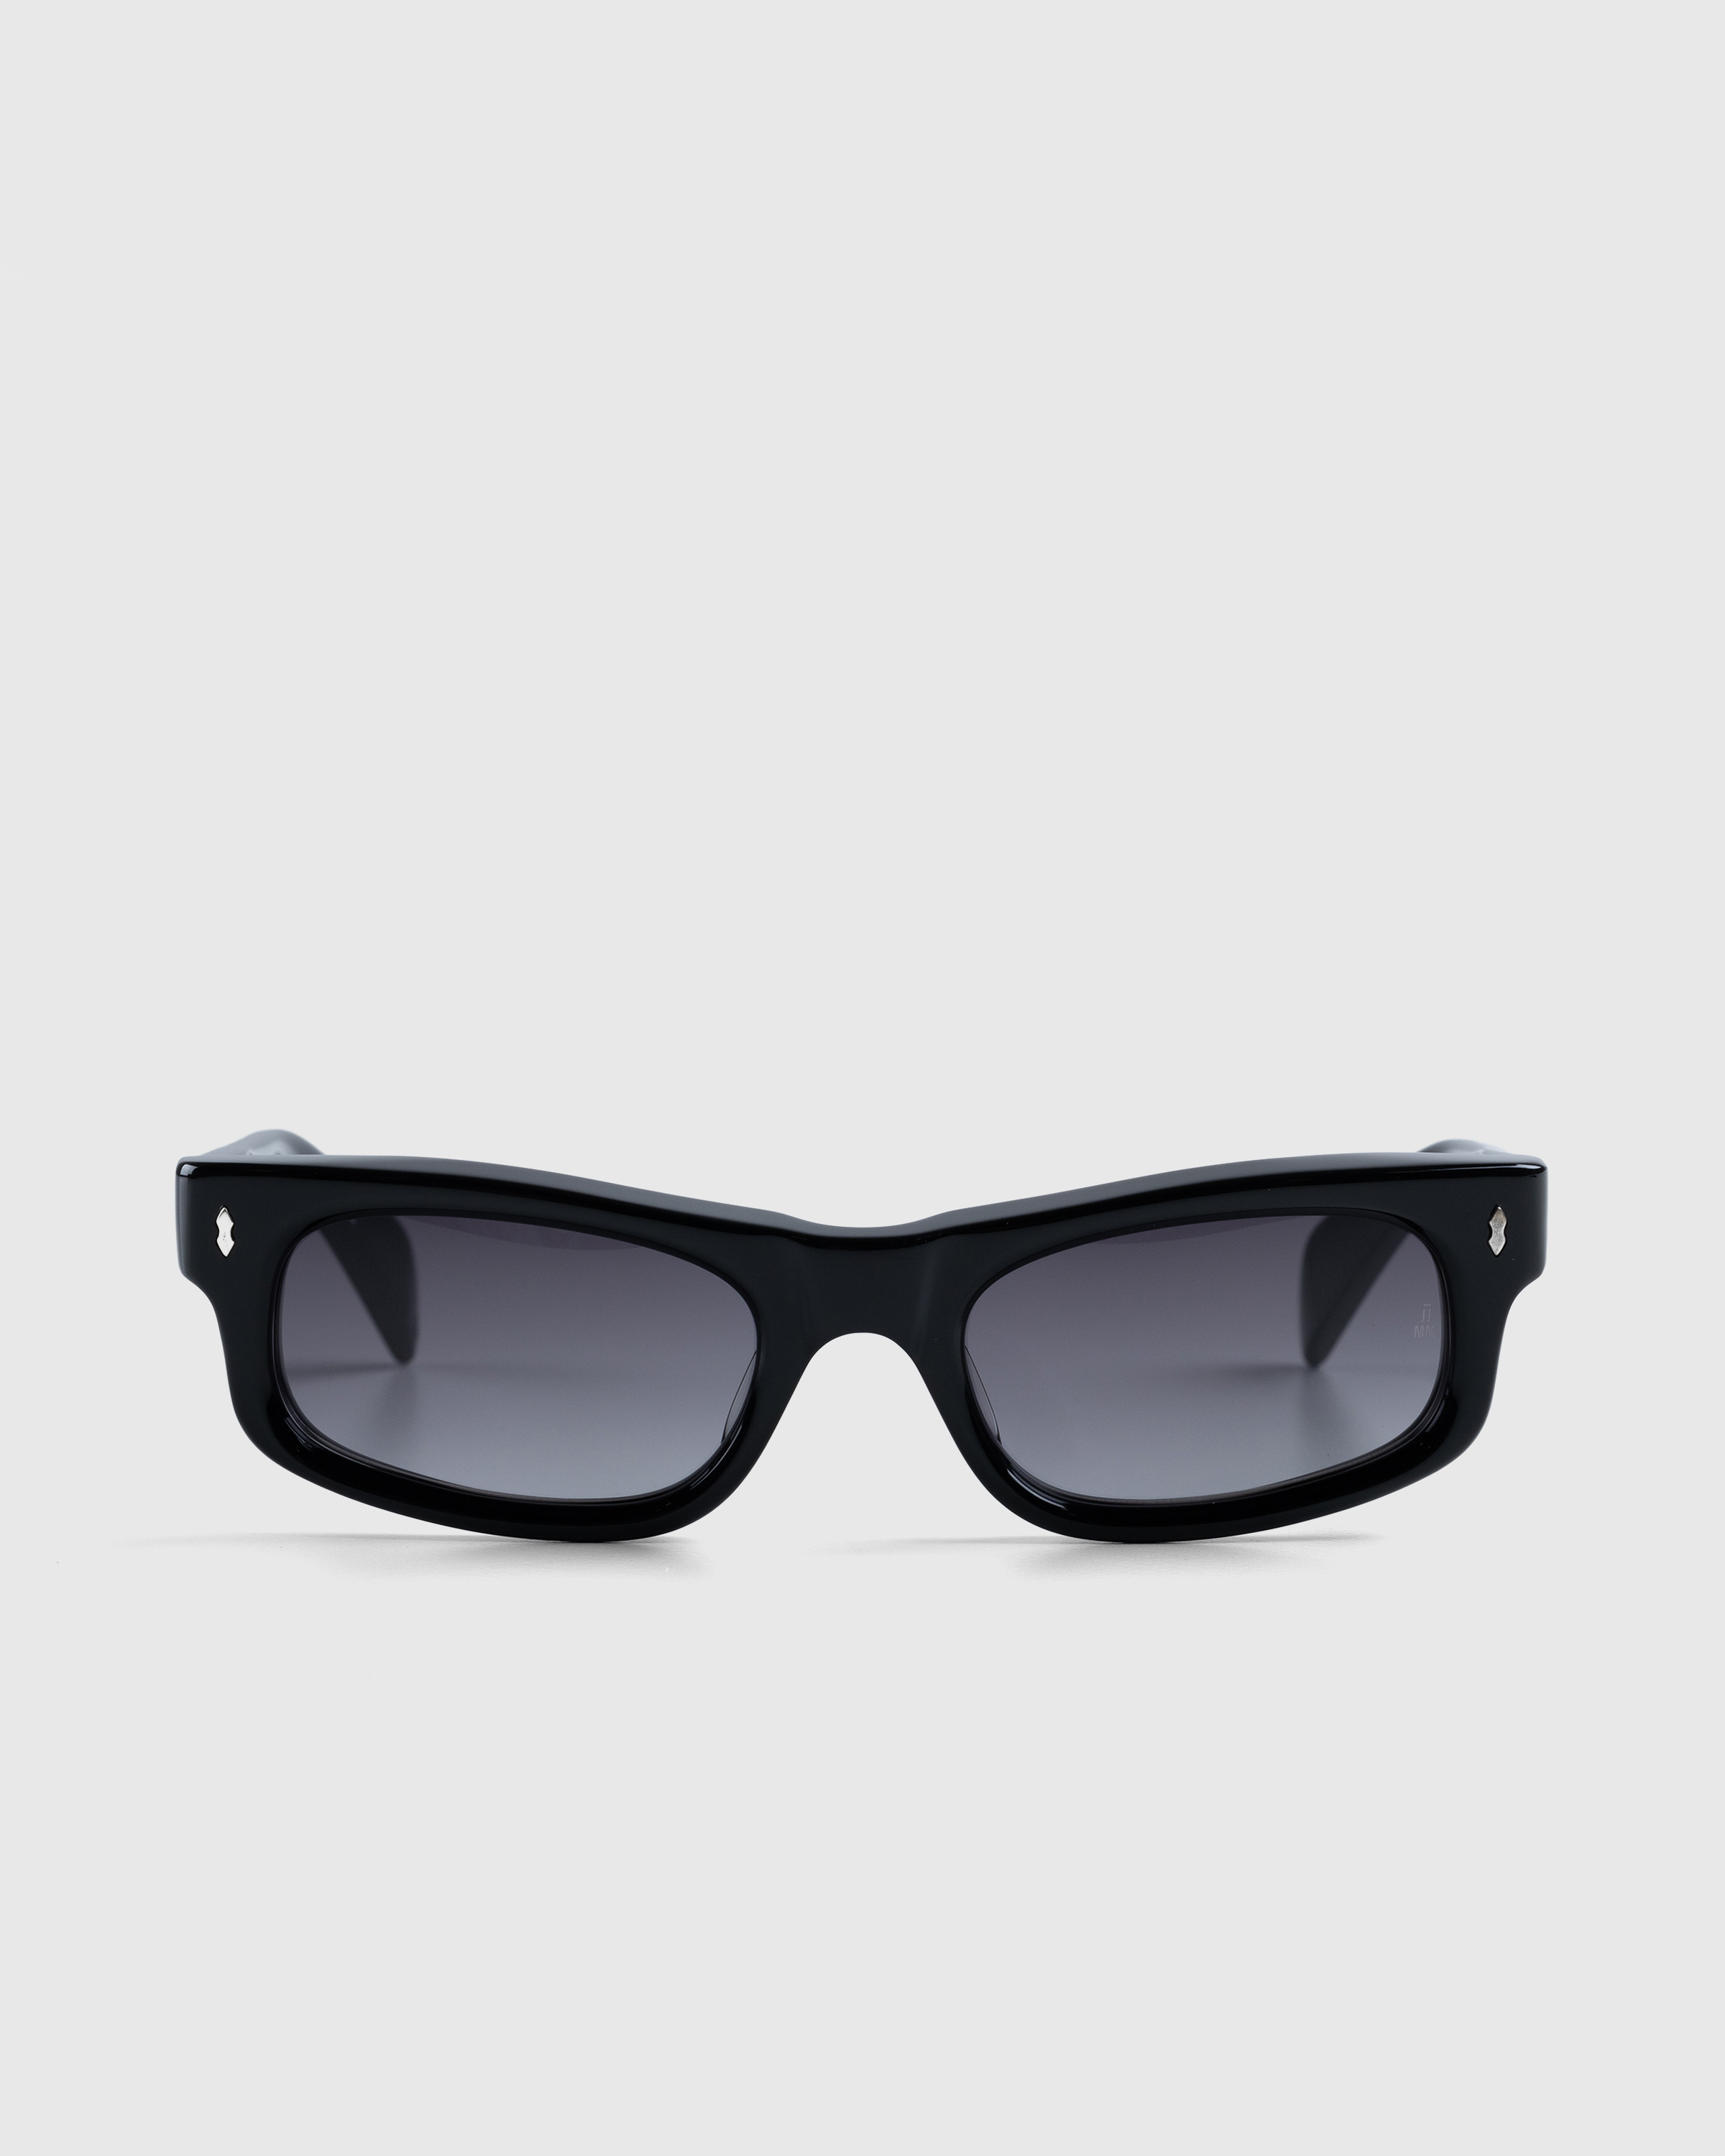 Jacques Marie Mage – Initials Black - Sunglasses - Black - Image 1